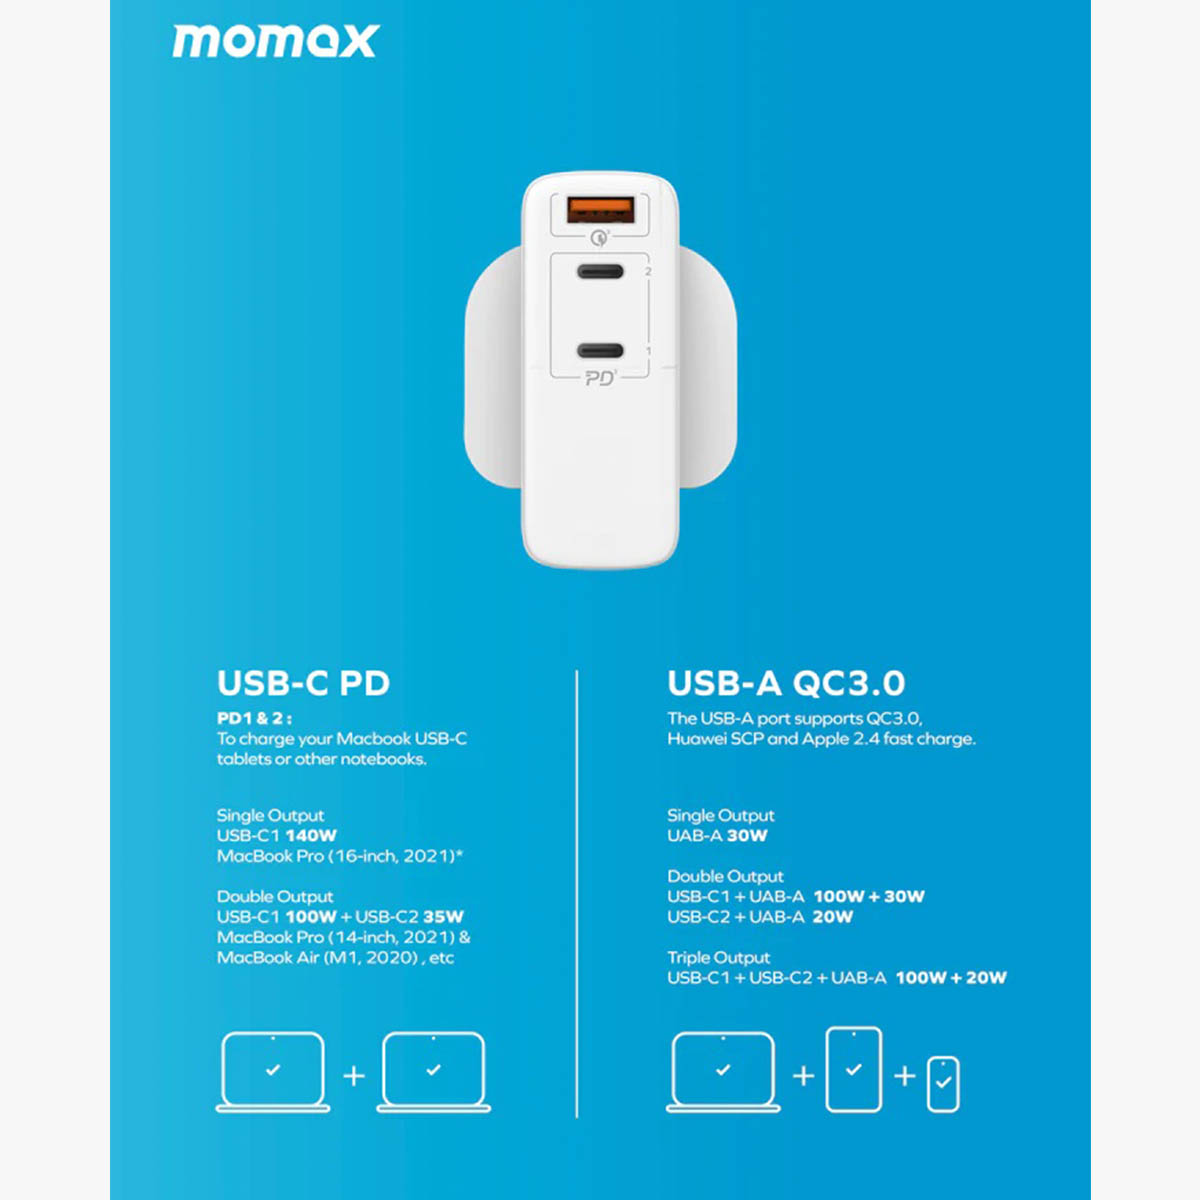 Momax ONEPLUG GaN 140W Triple Output Fast Charger (UM27UKW)